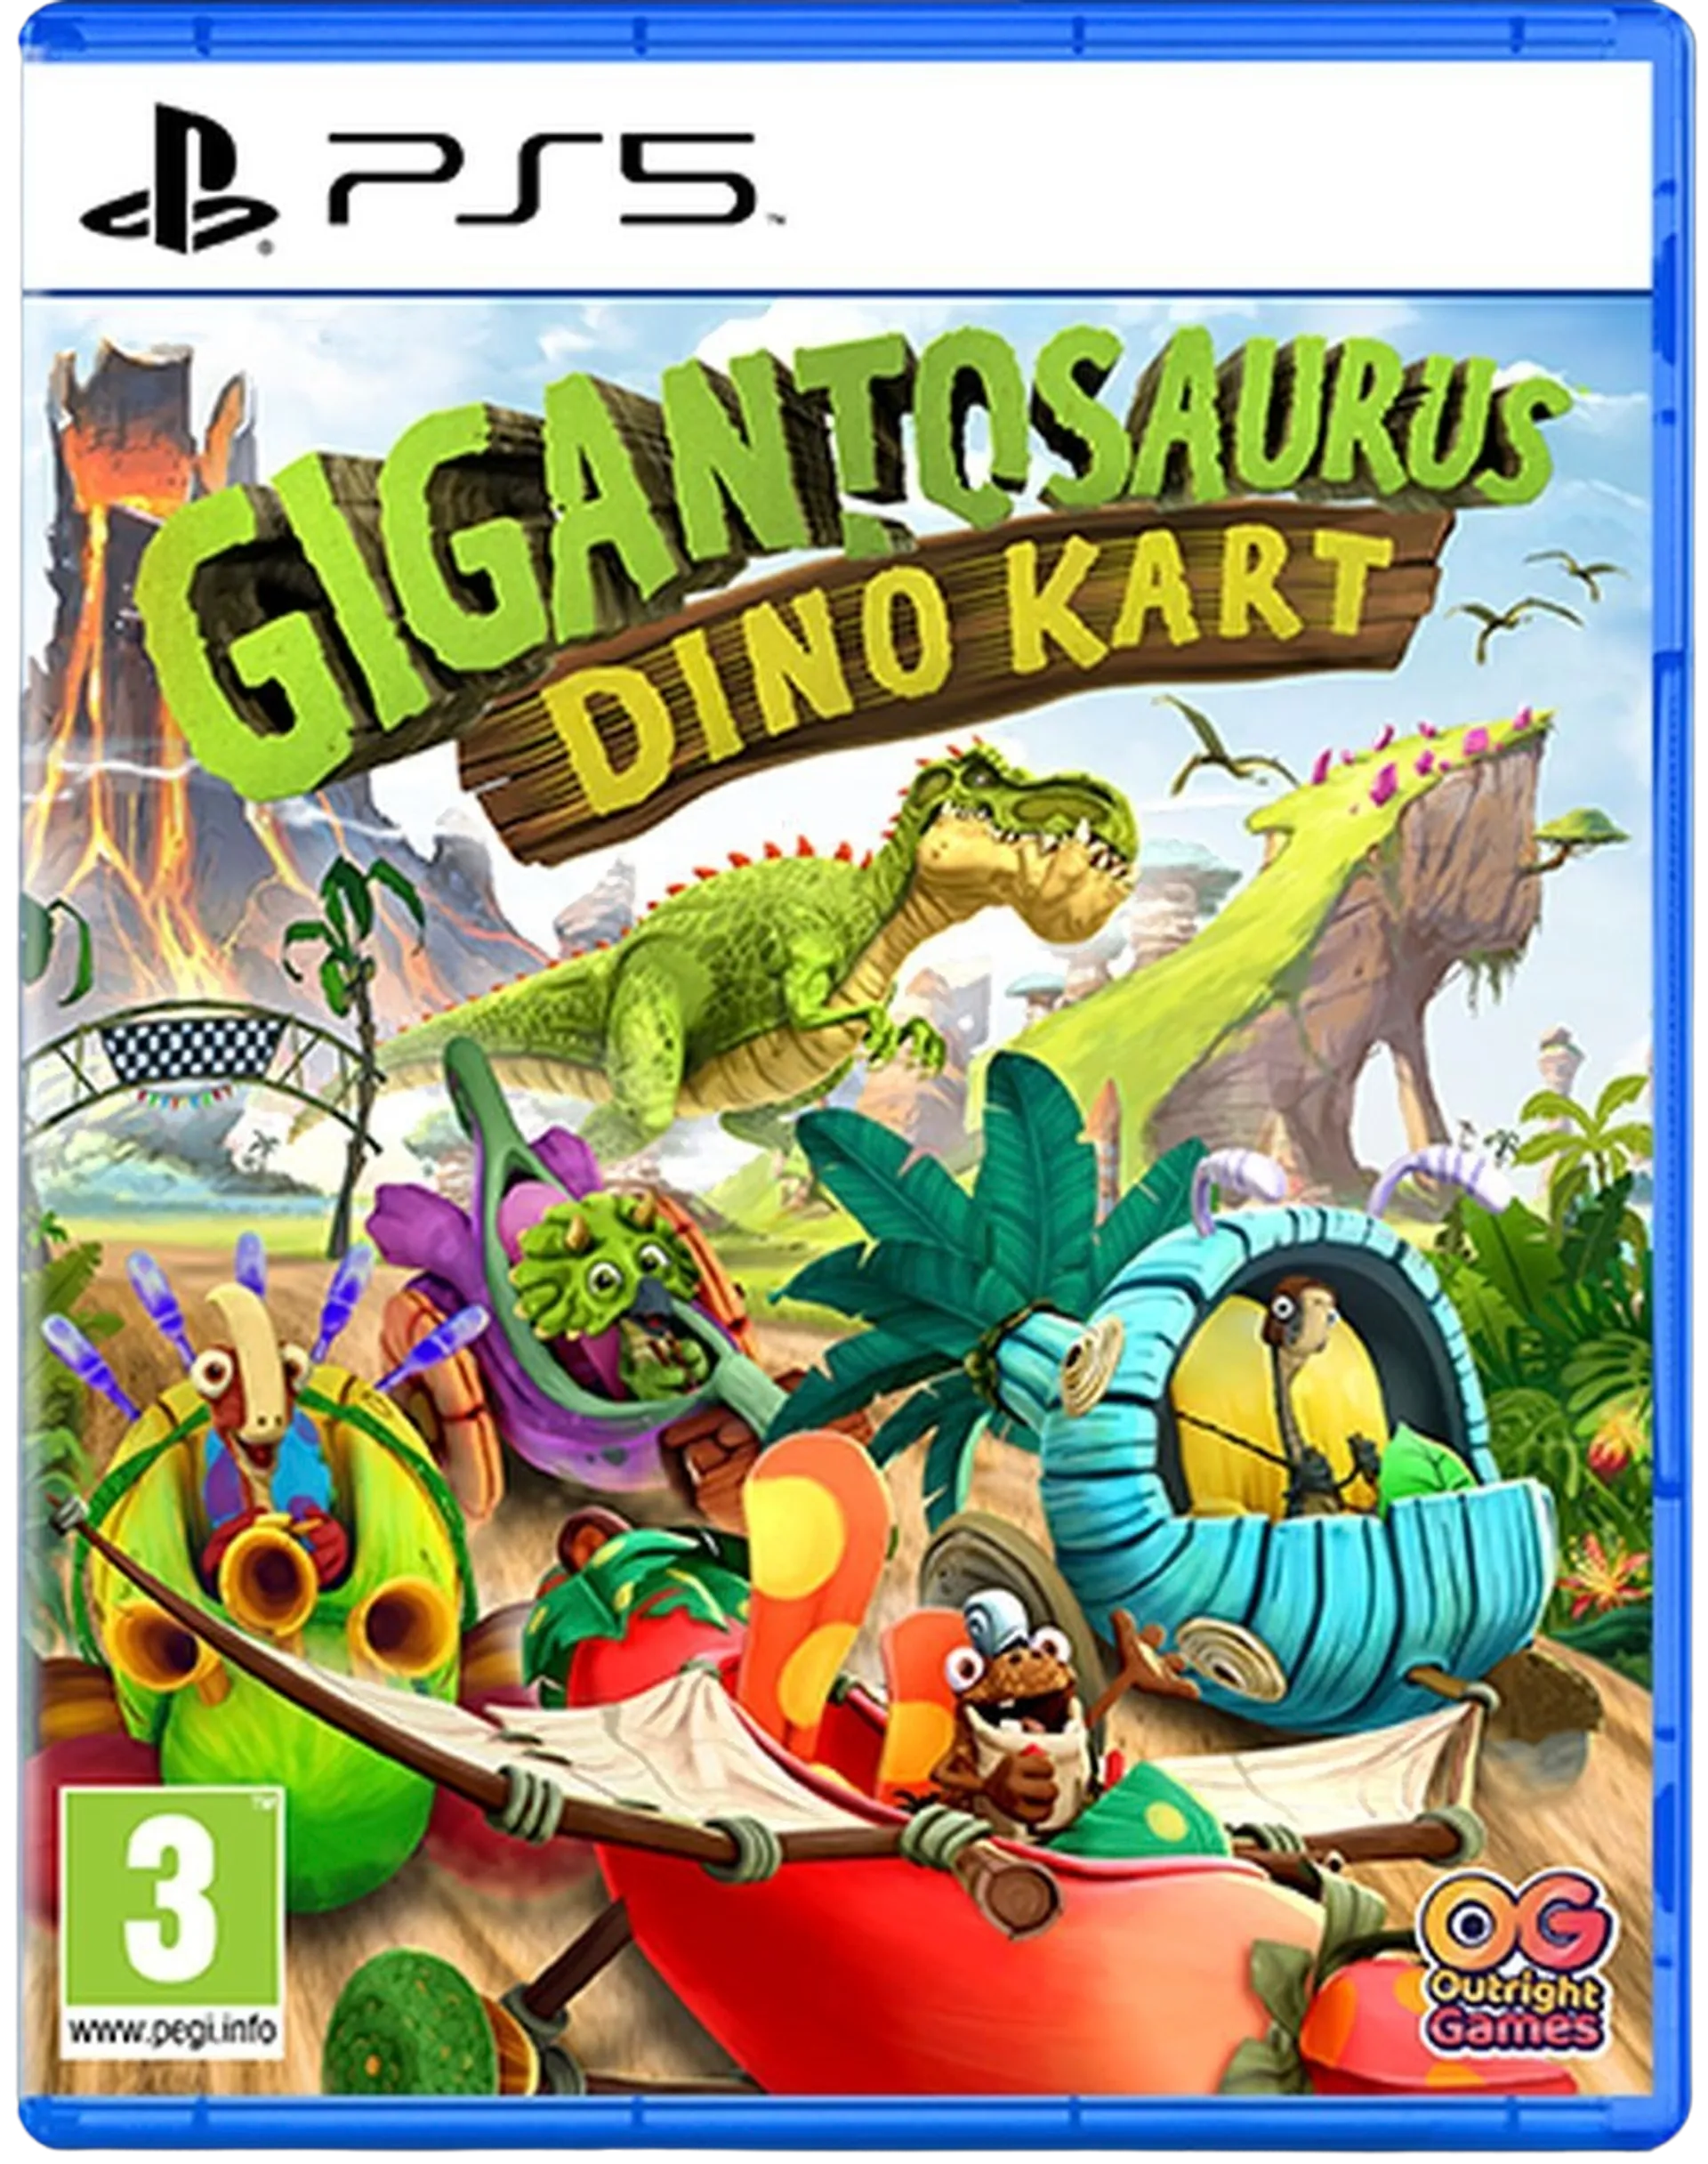 PlayStation 5 Gigantosaurus: Dino Kart